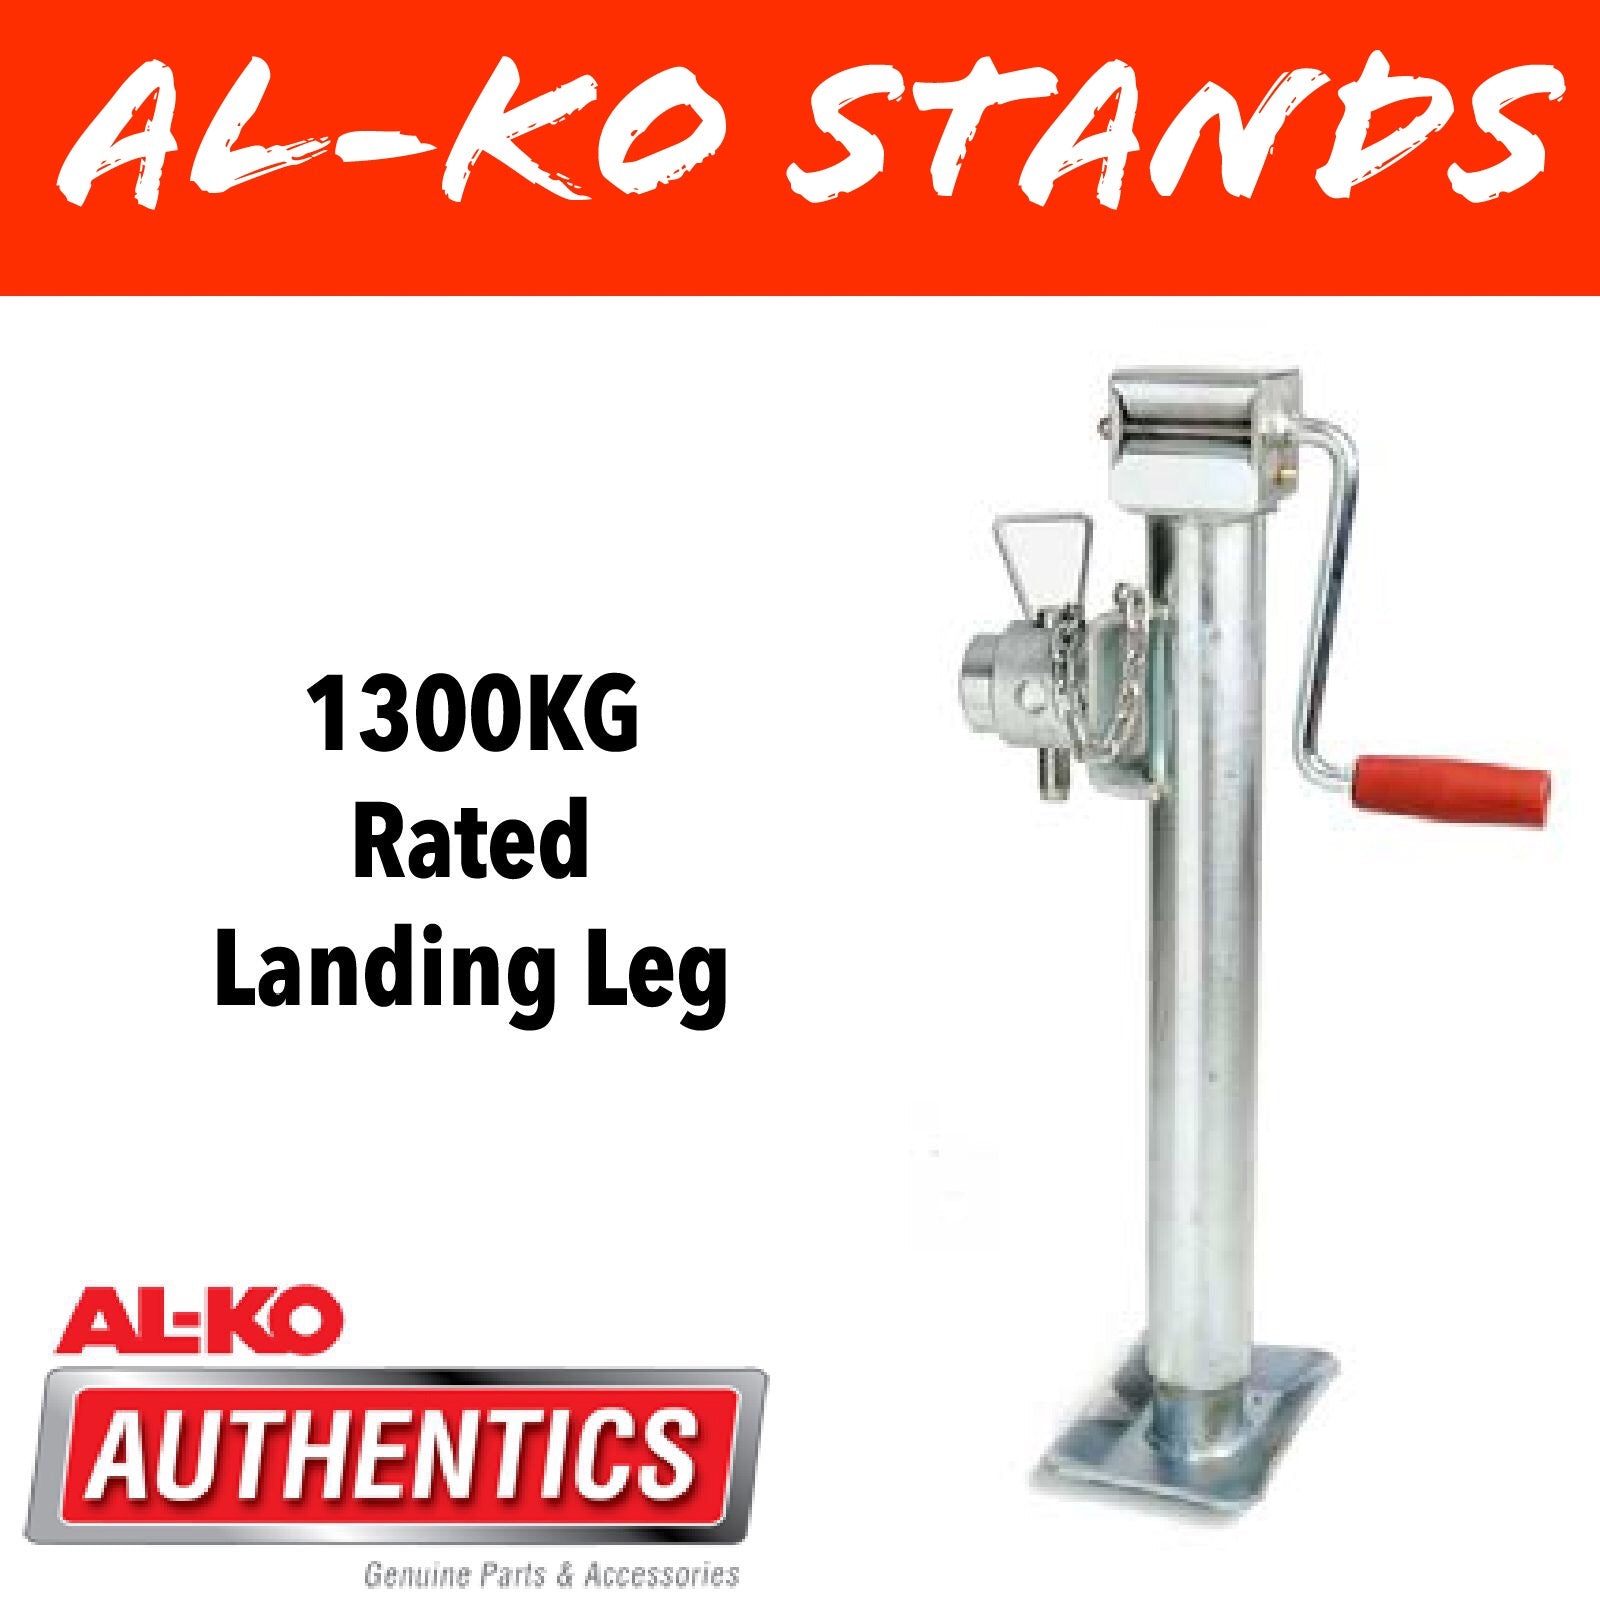 AL-KO 1300KG Rated Landing Leg